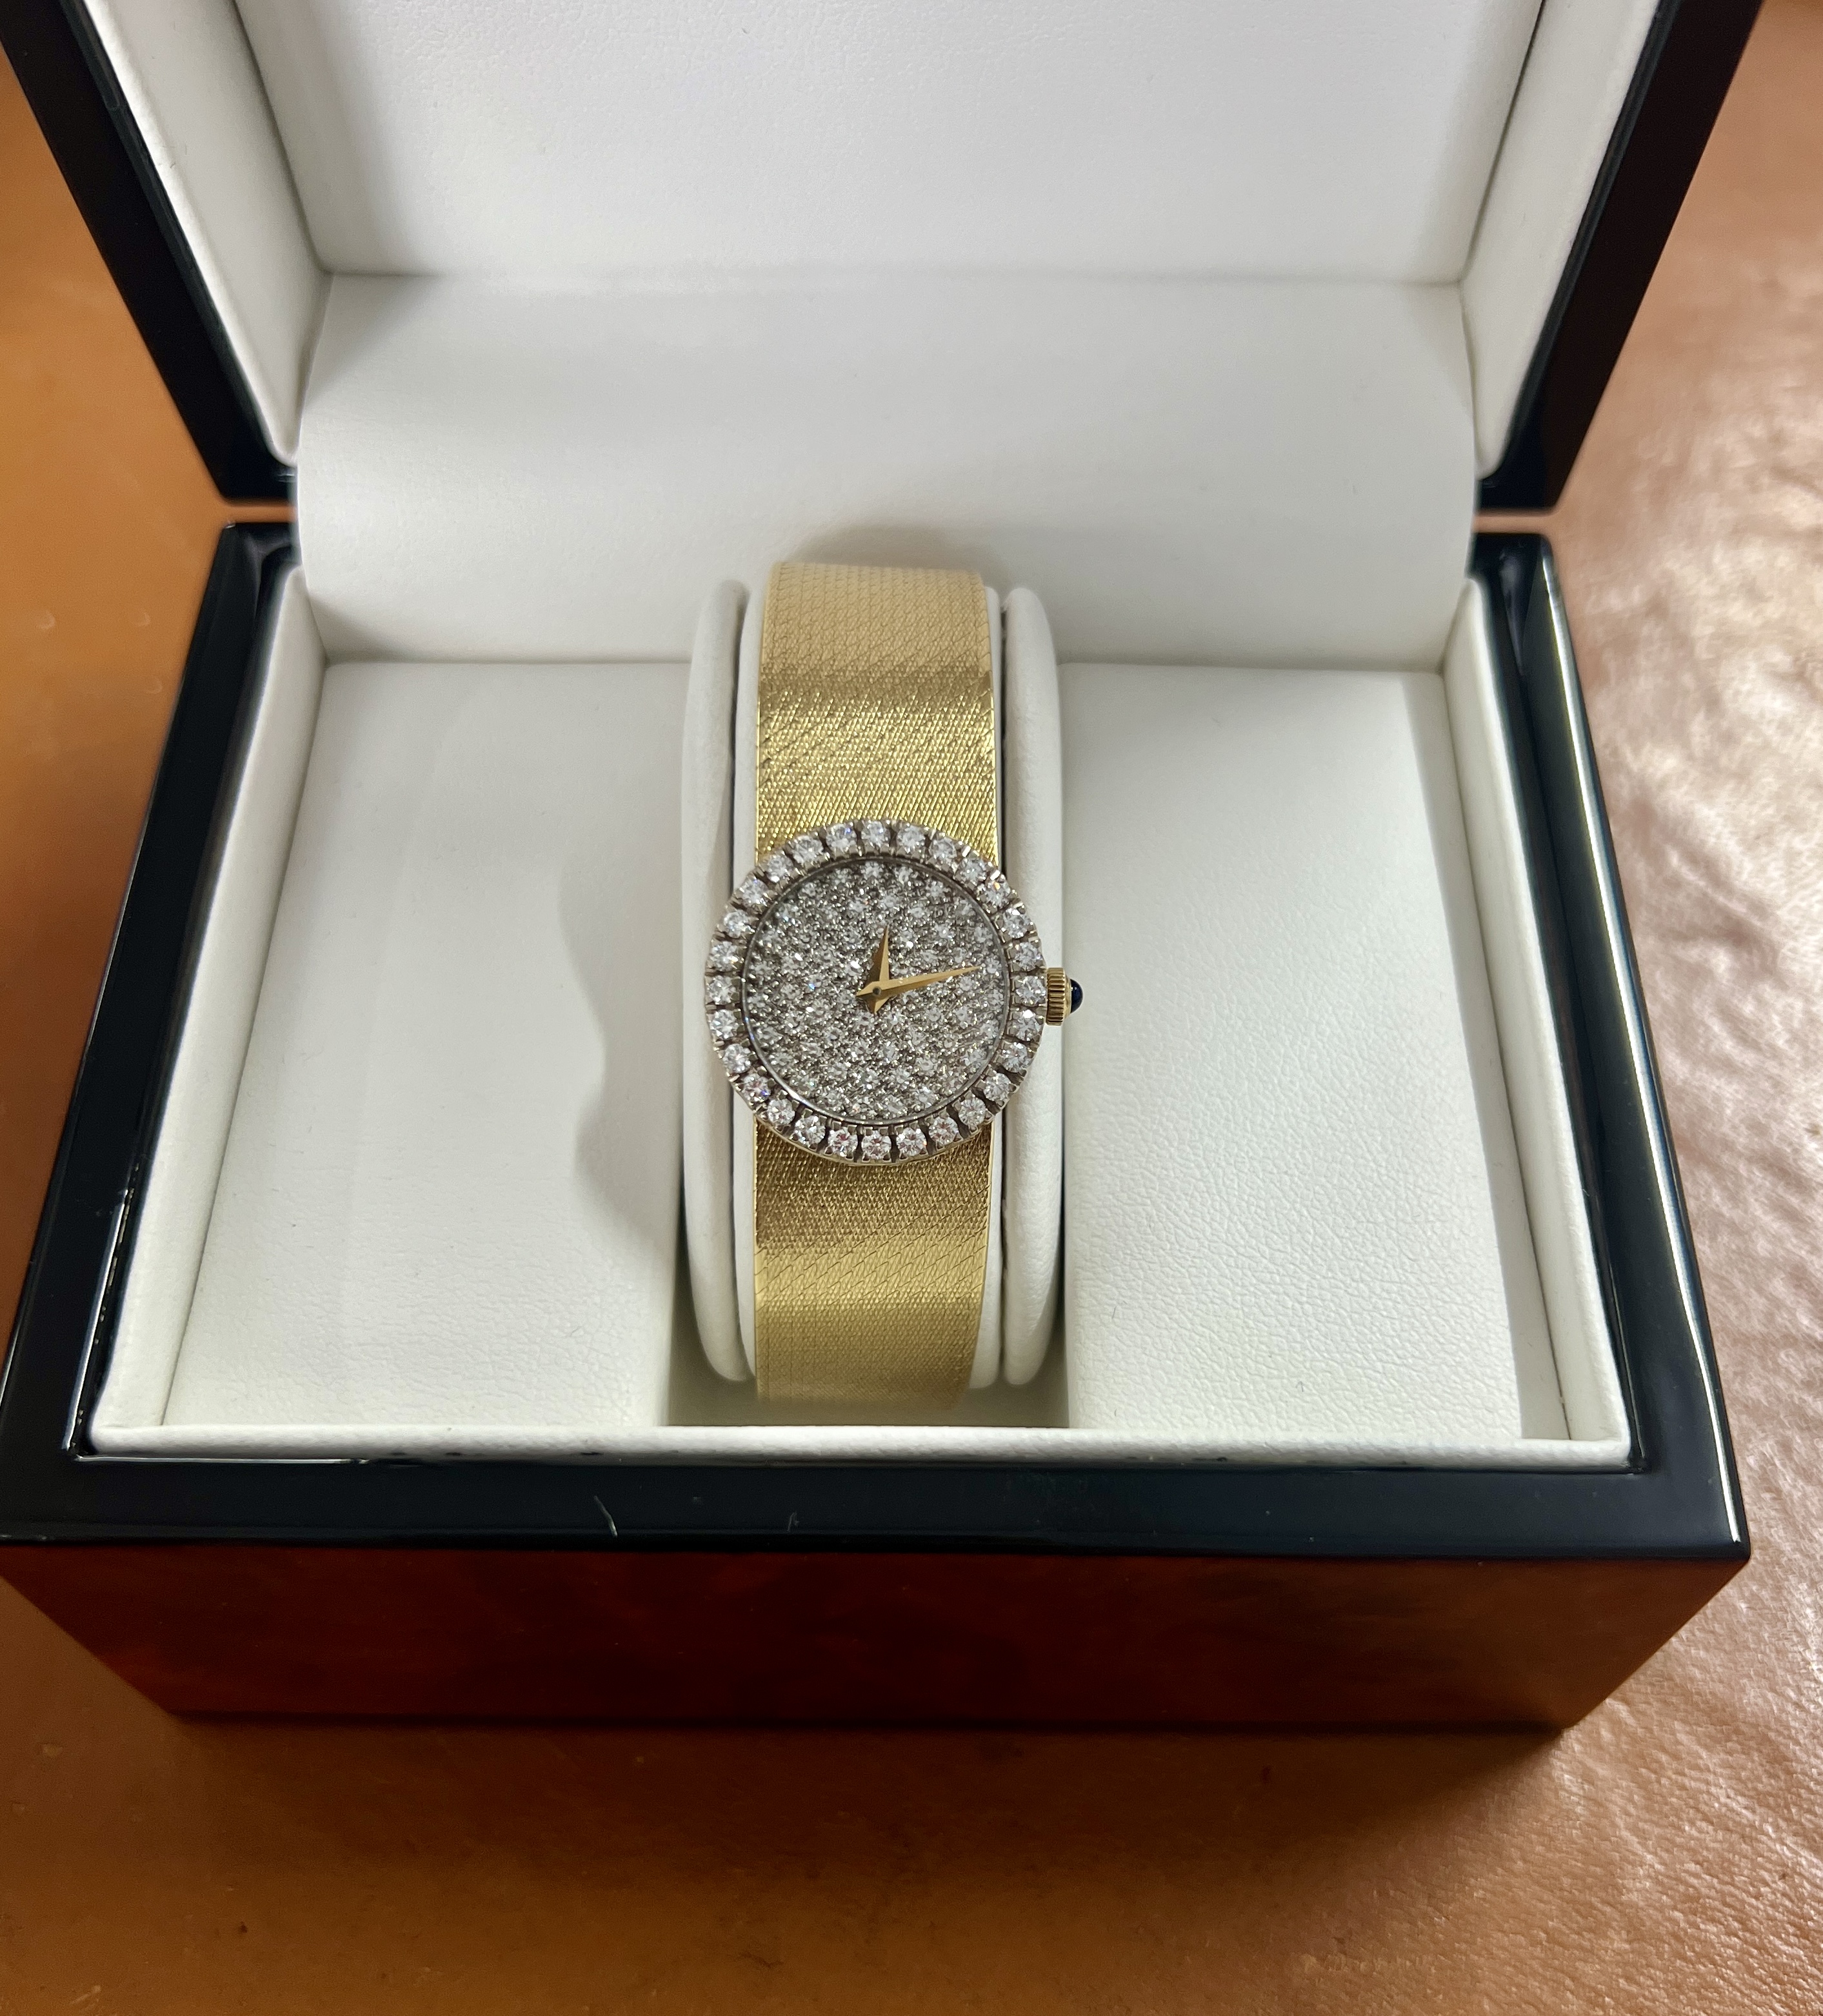 Baume & Mercier a pave diamond set ladies diamond 18ct gold wristwatch, backplate numbers 818995,